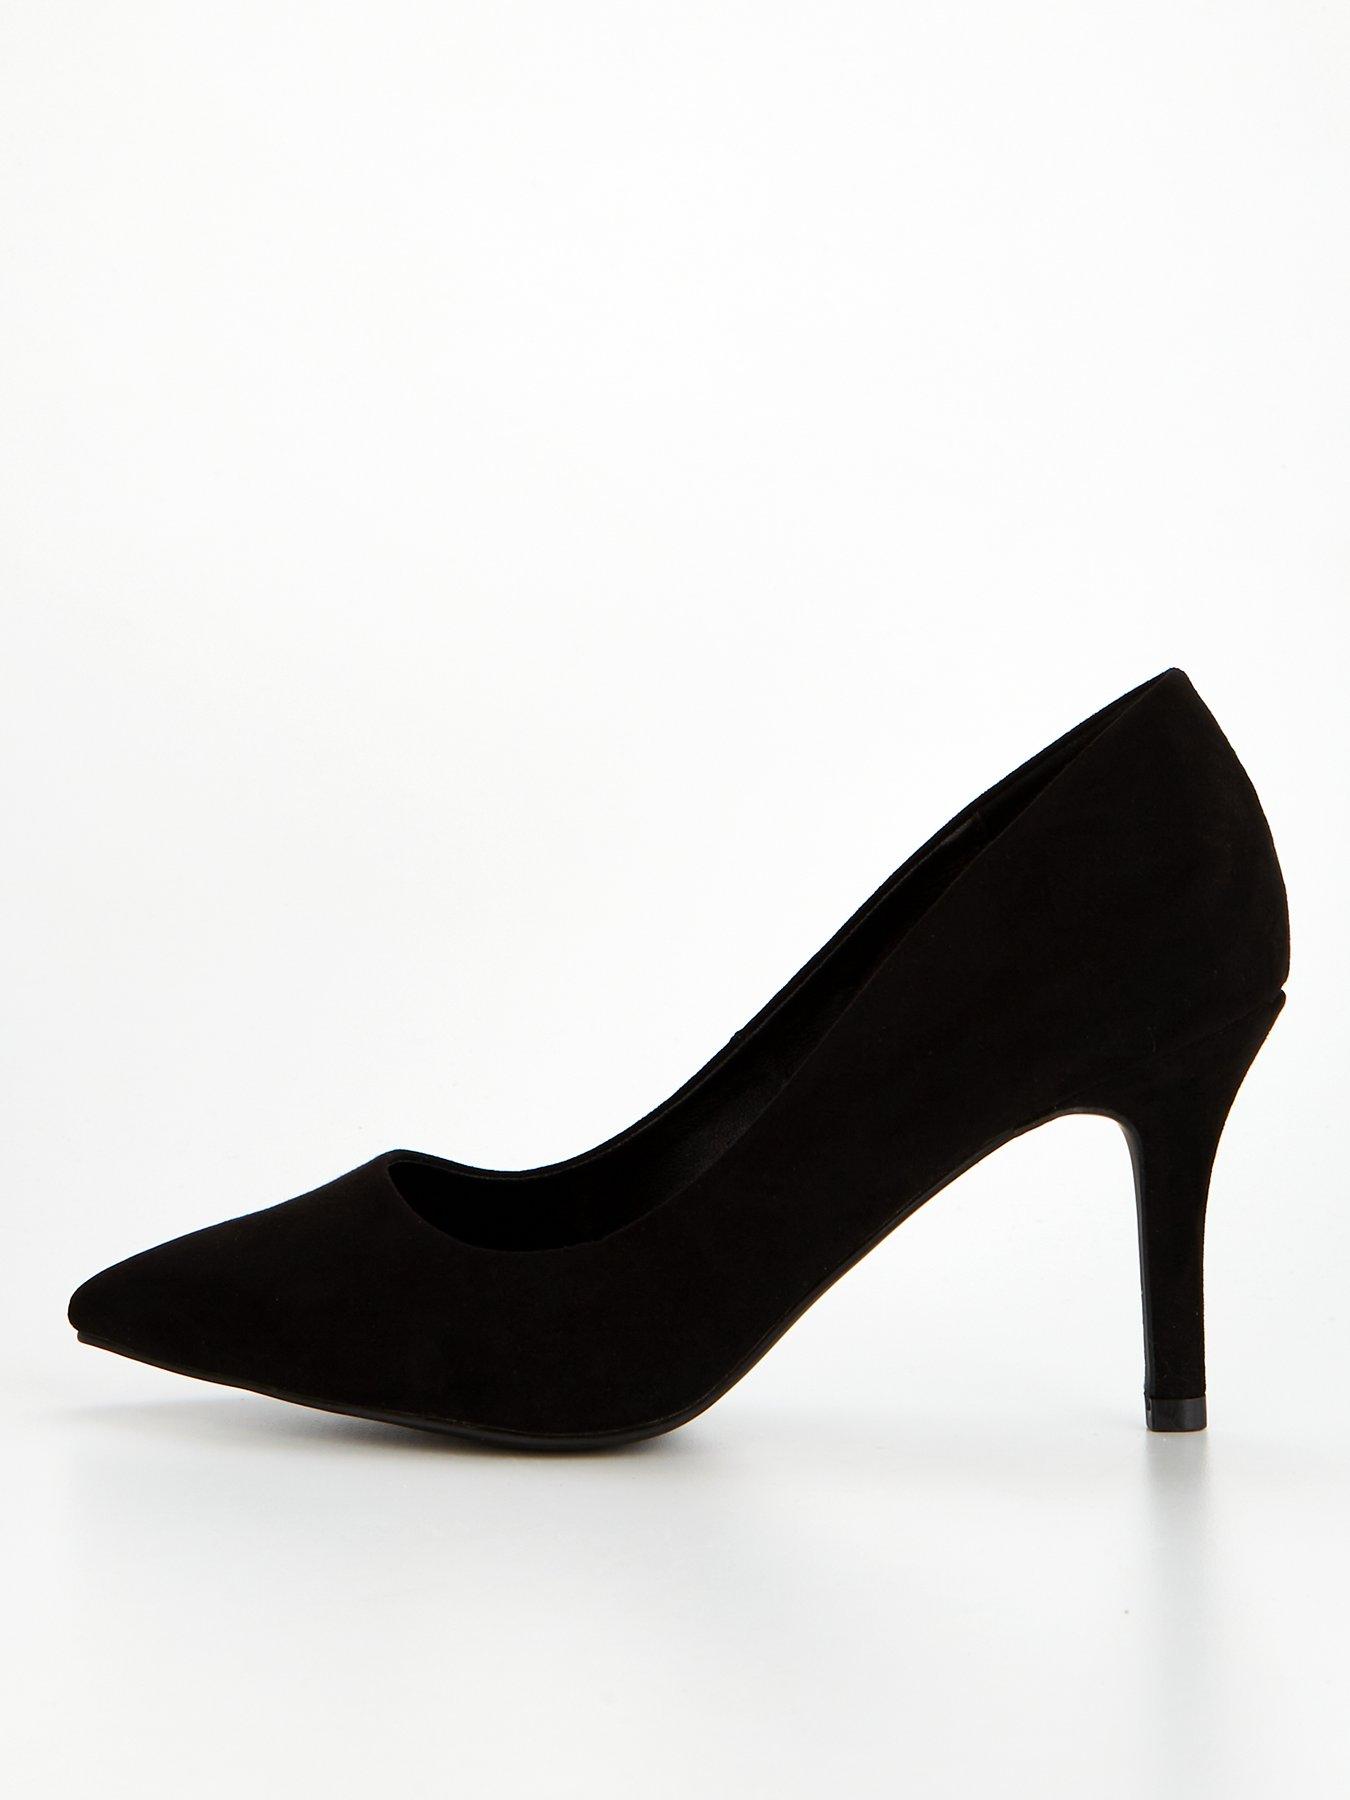 GKTINOO Genuine Leather shoes Women Pointed Toe Pumps Sapato feminino High  Heels Shallow Fashion Black Work Shoe Plus Size 33-43